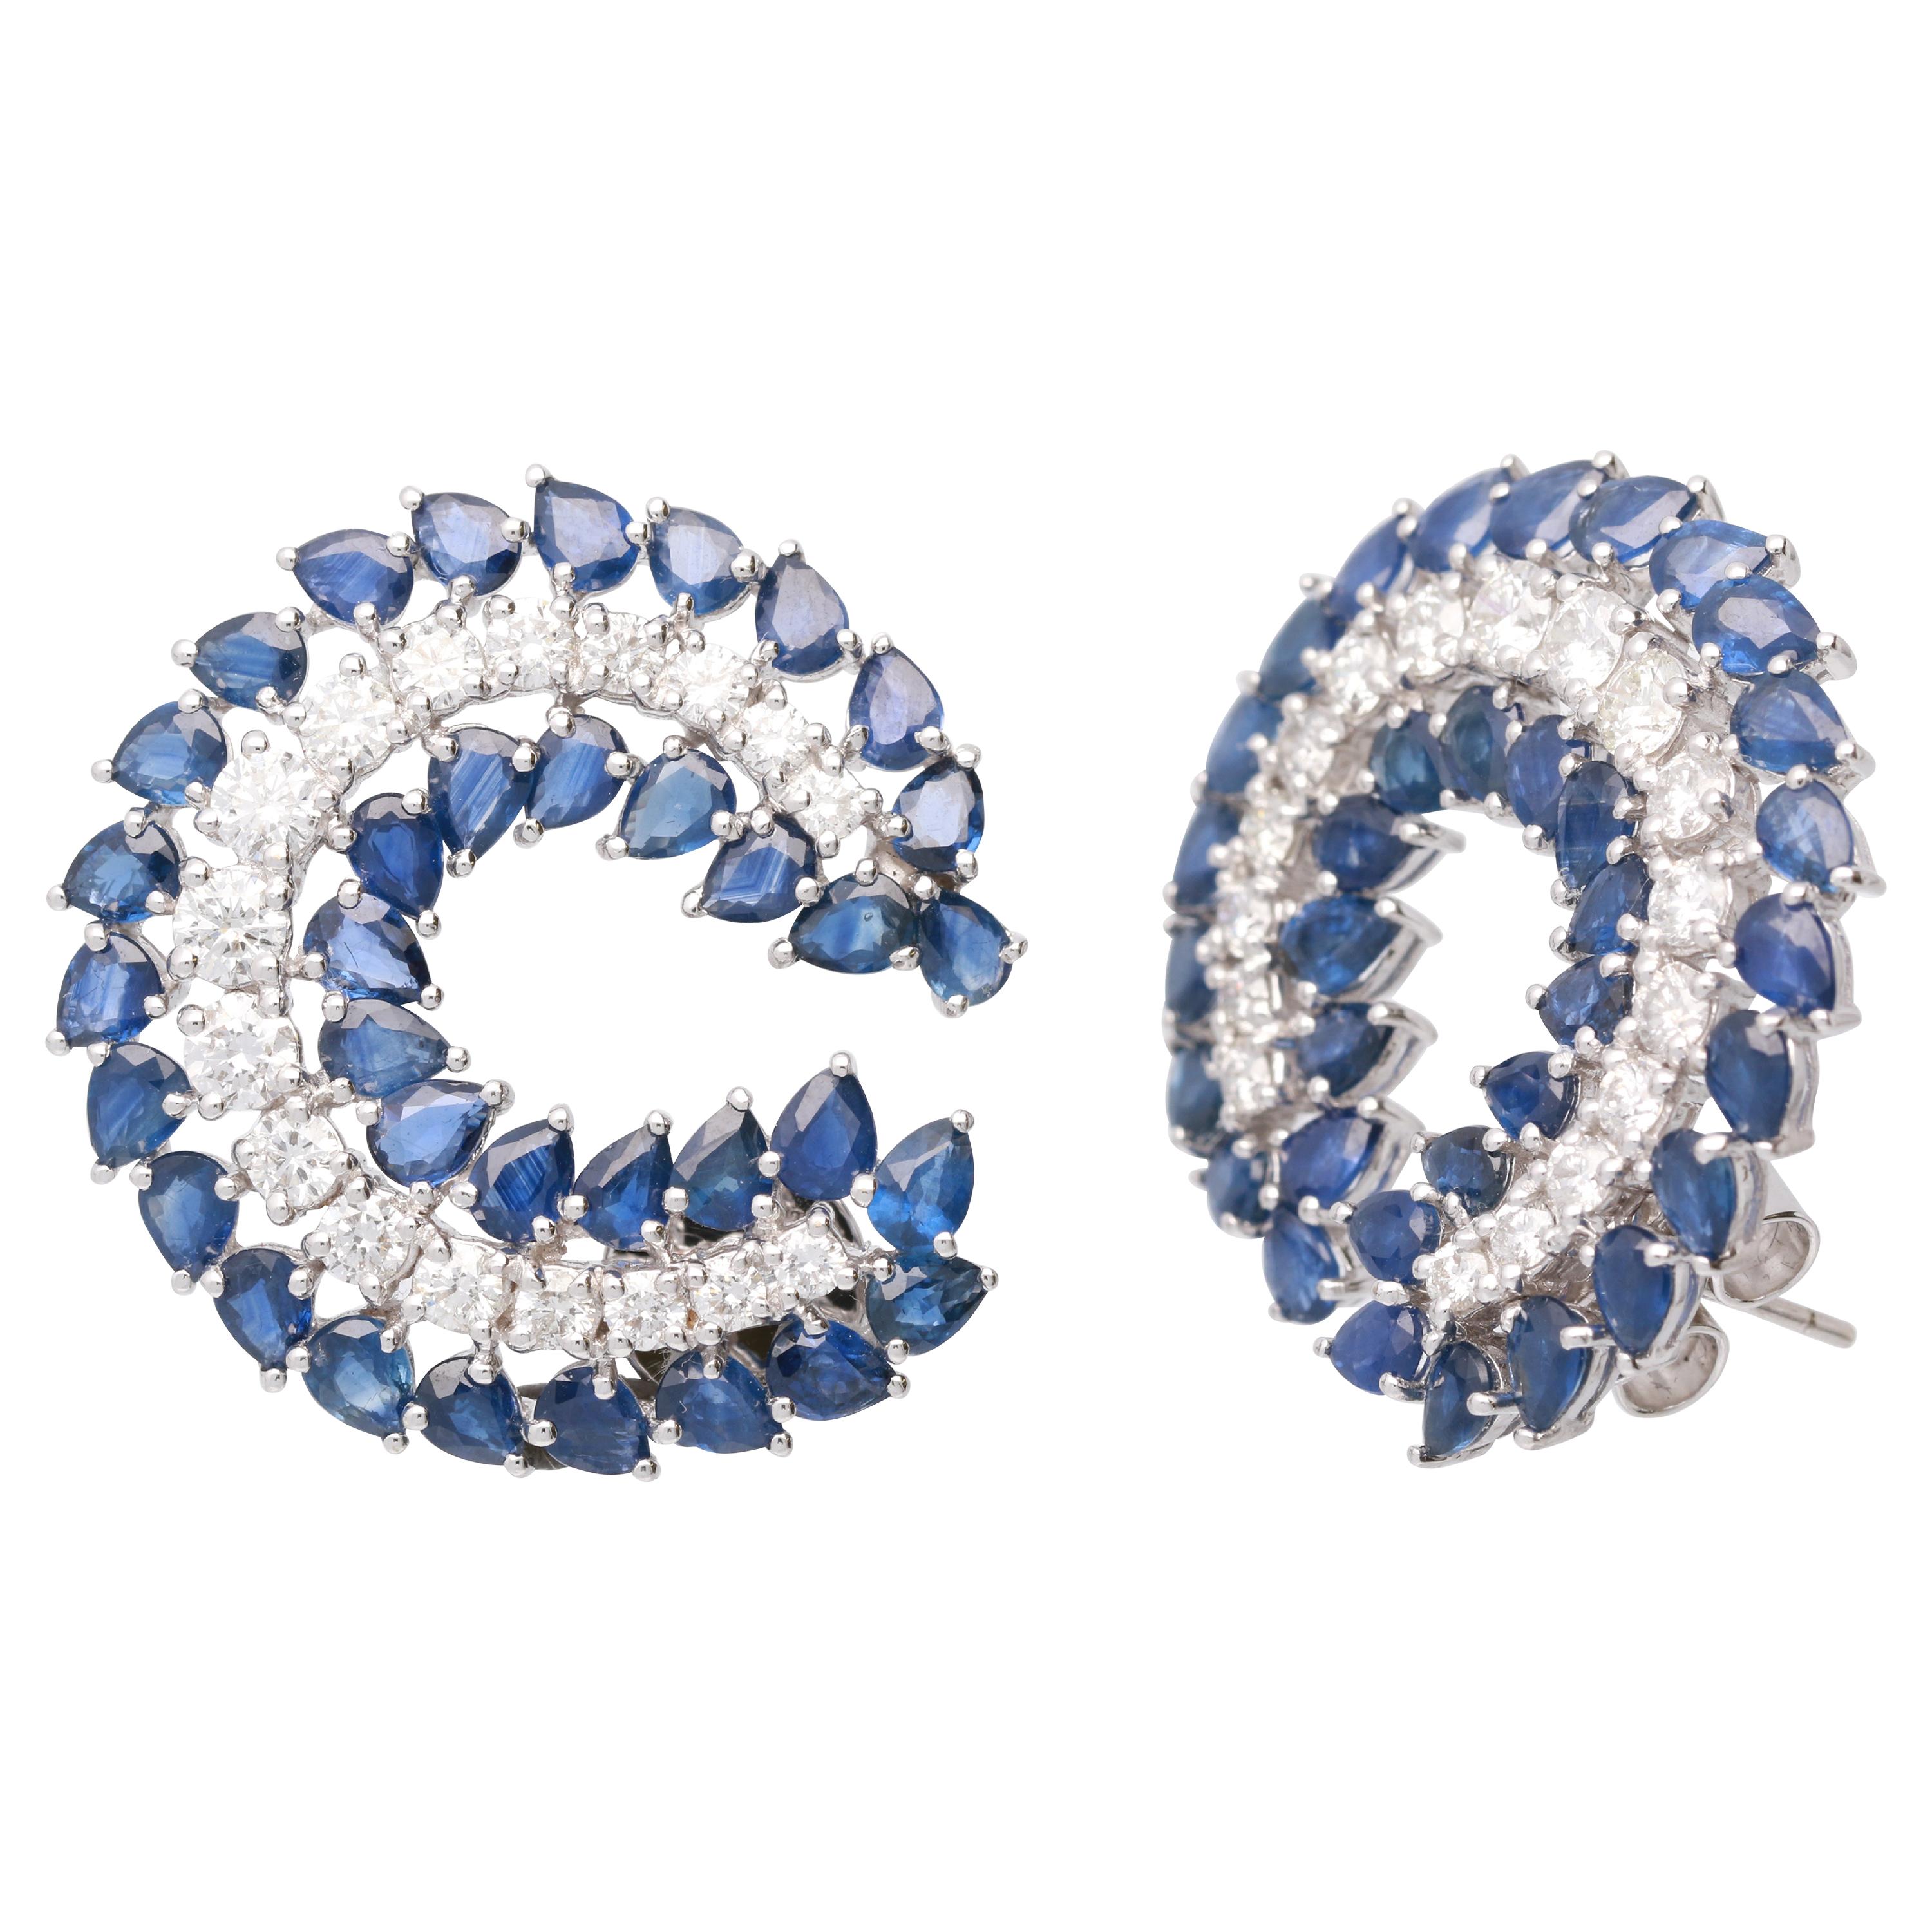 10.94 Carat Blue Sapphire 18 Karat White Gold Earring